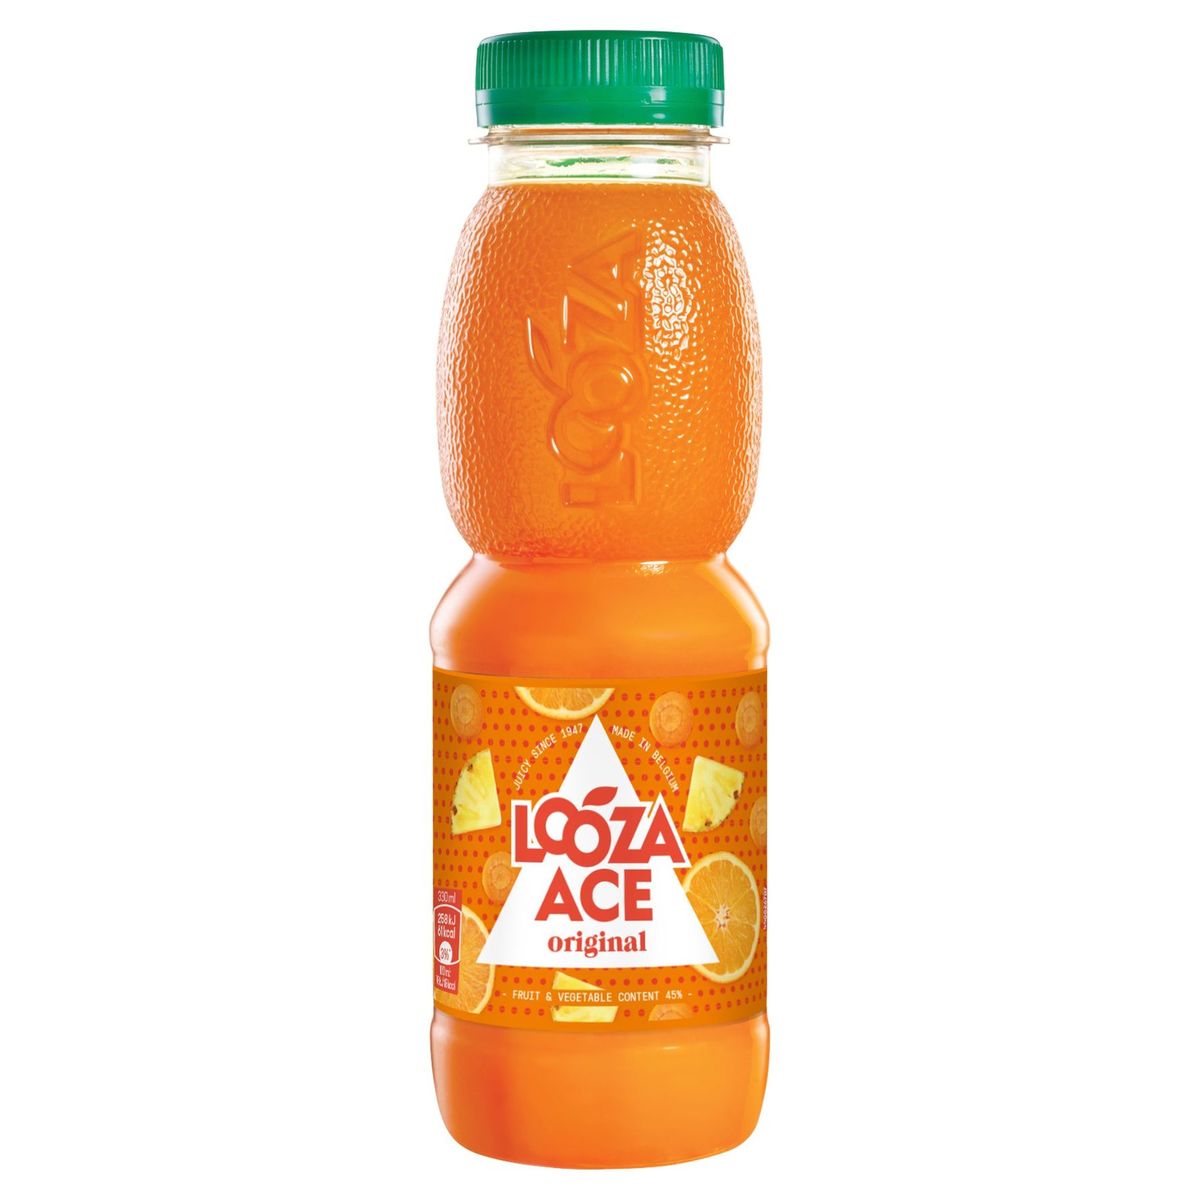 Looza ACE Original Fruitsap 33 cl